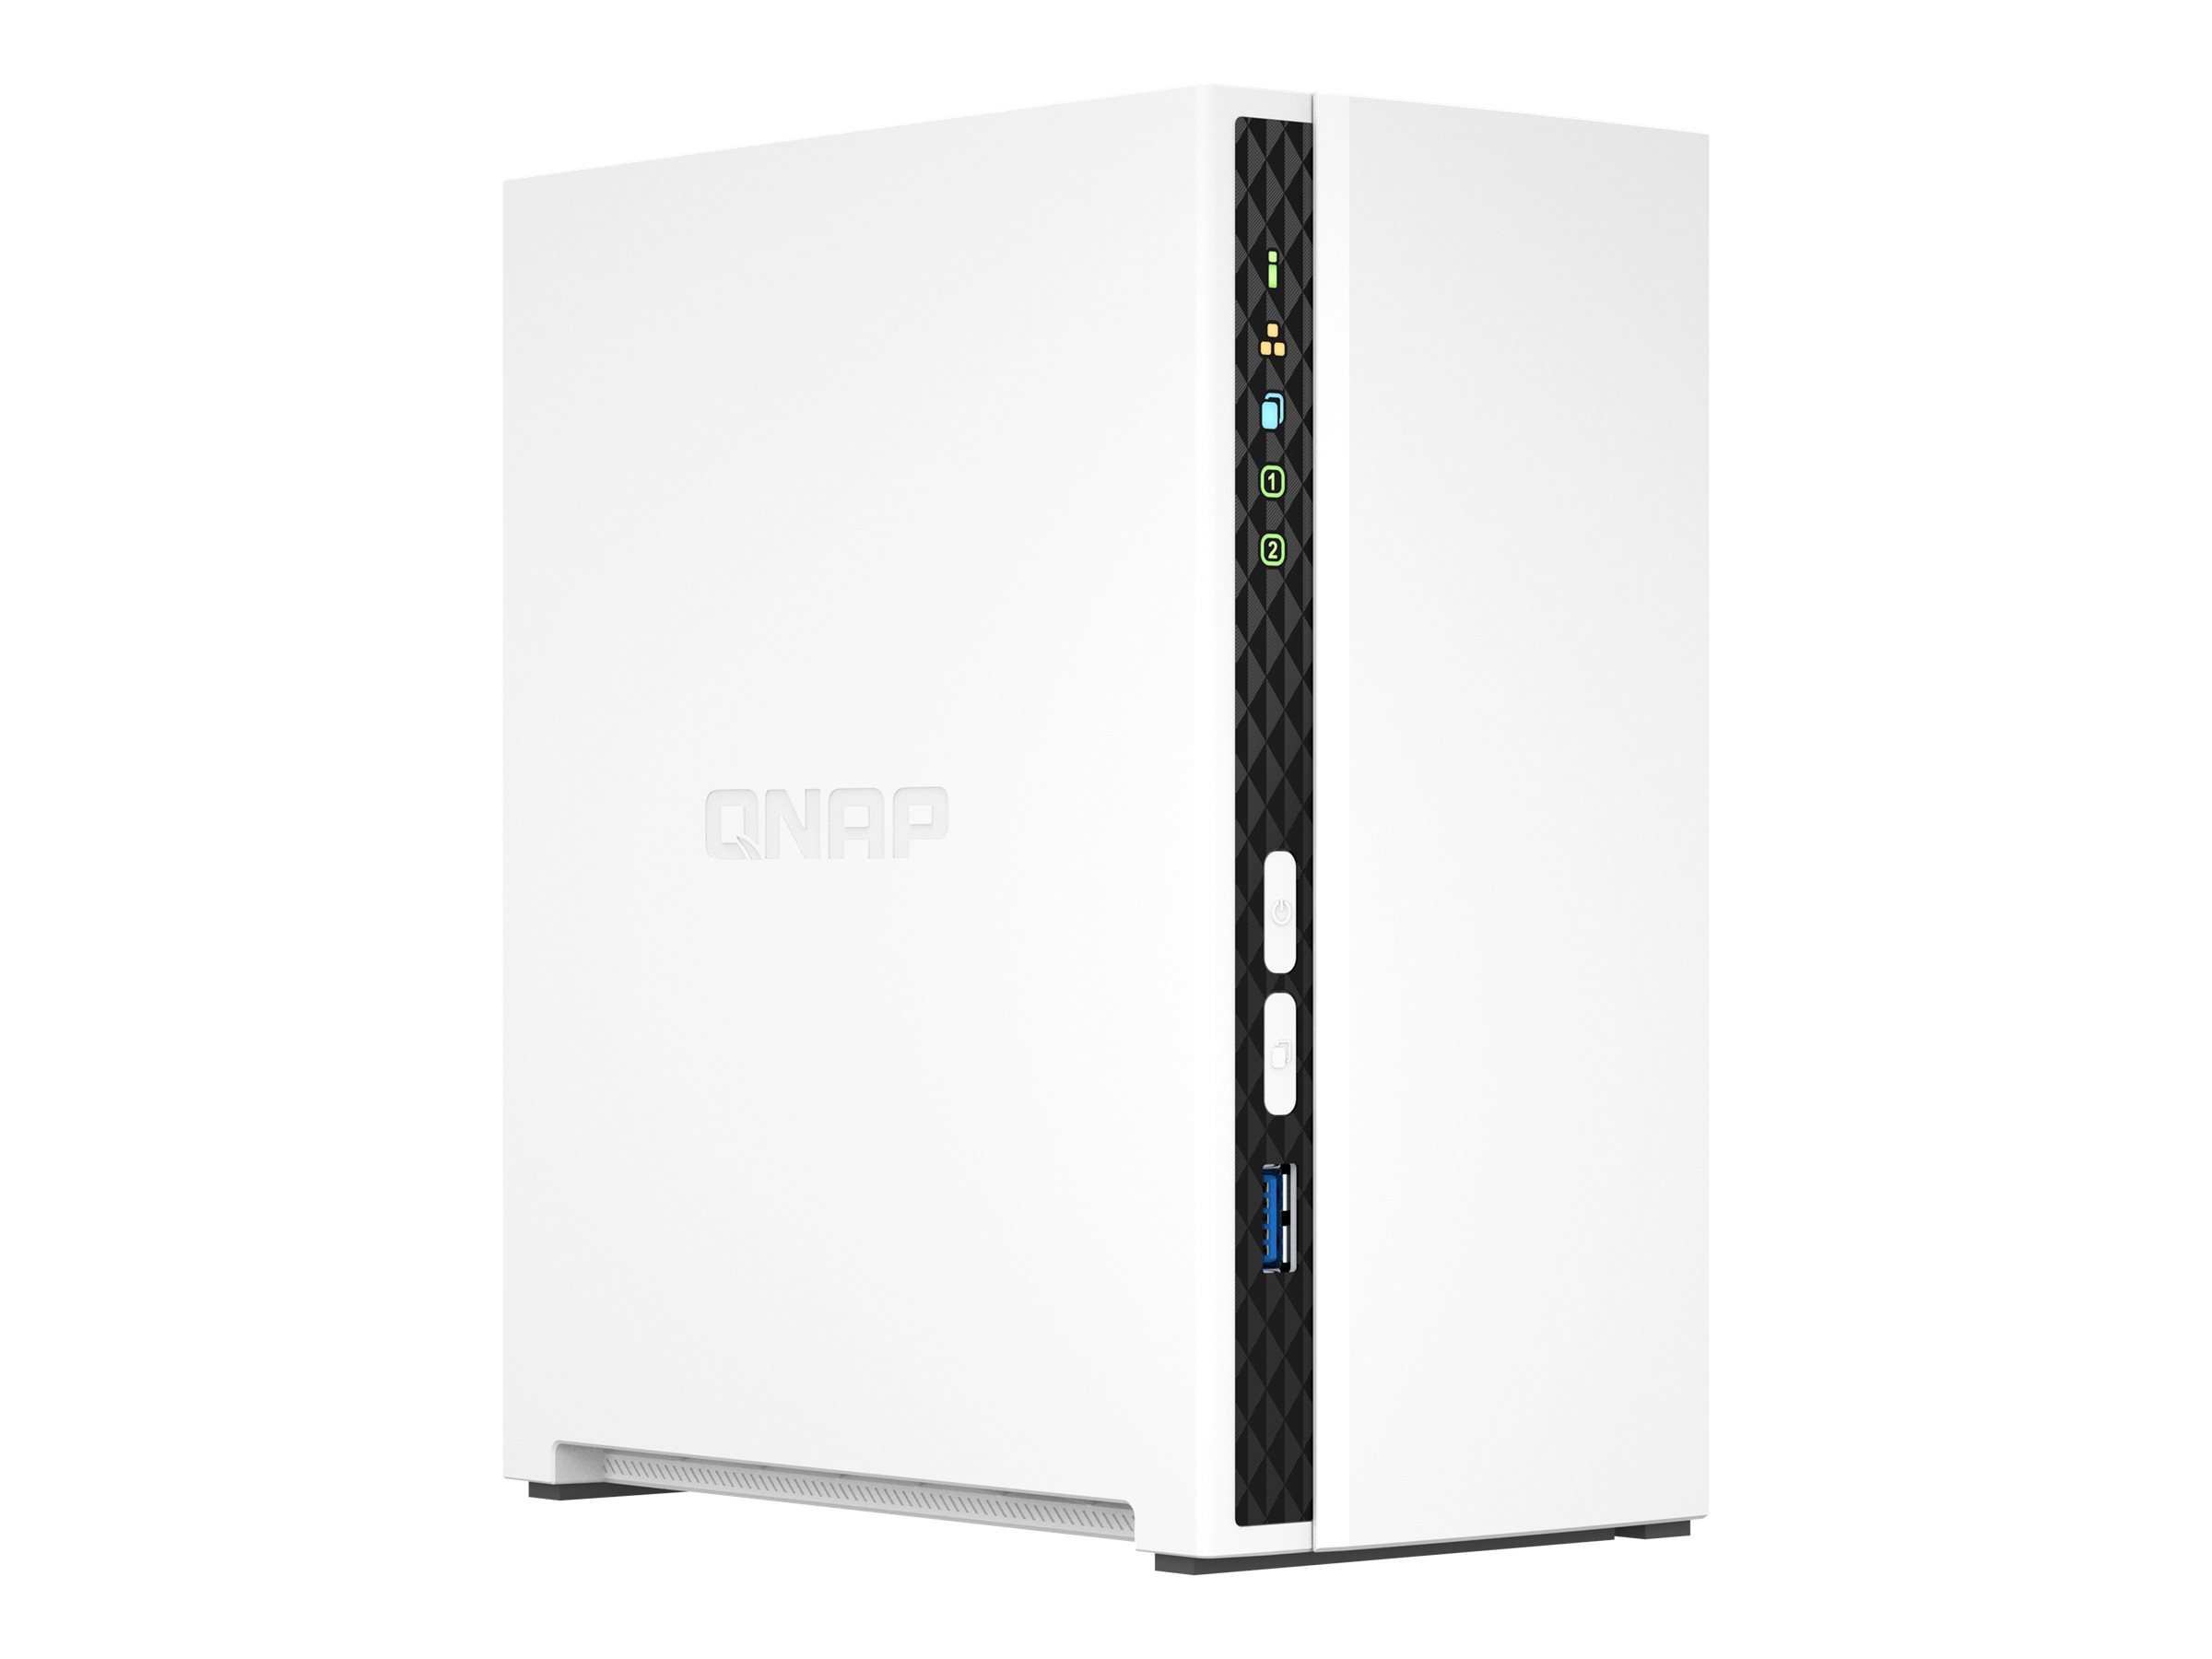 QNAP TS-233 - Personal cloud storage device